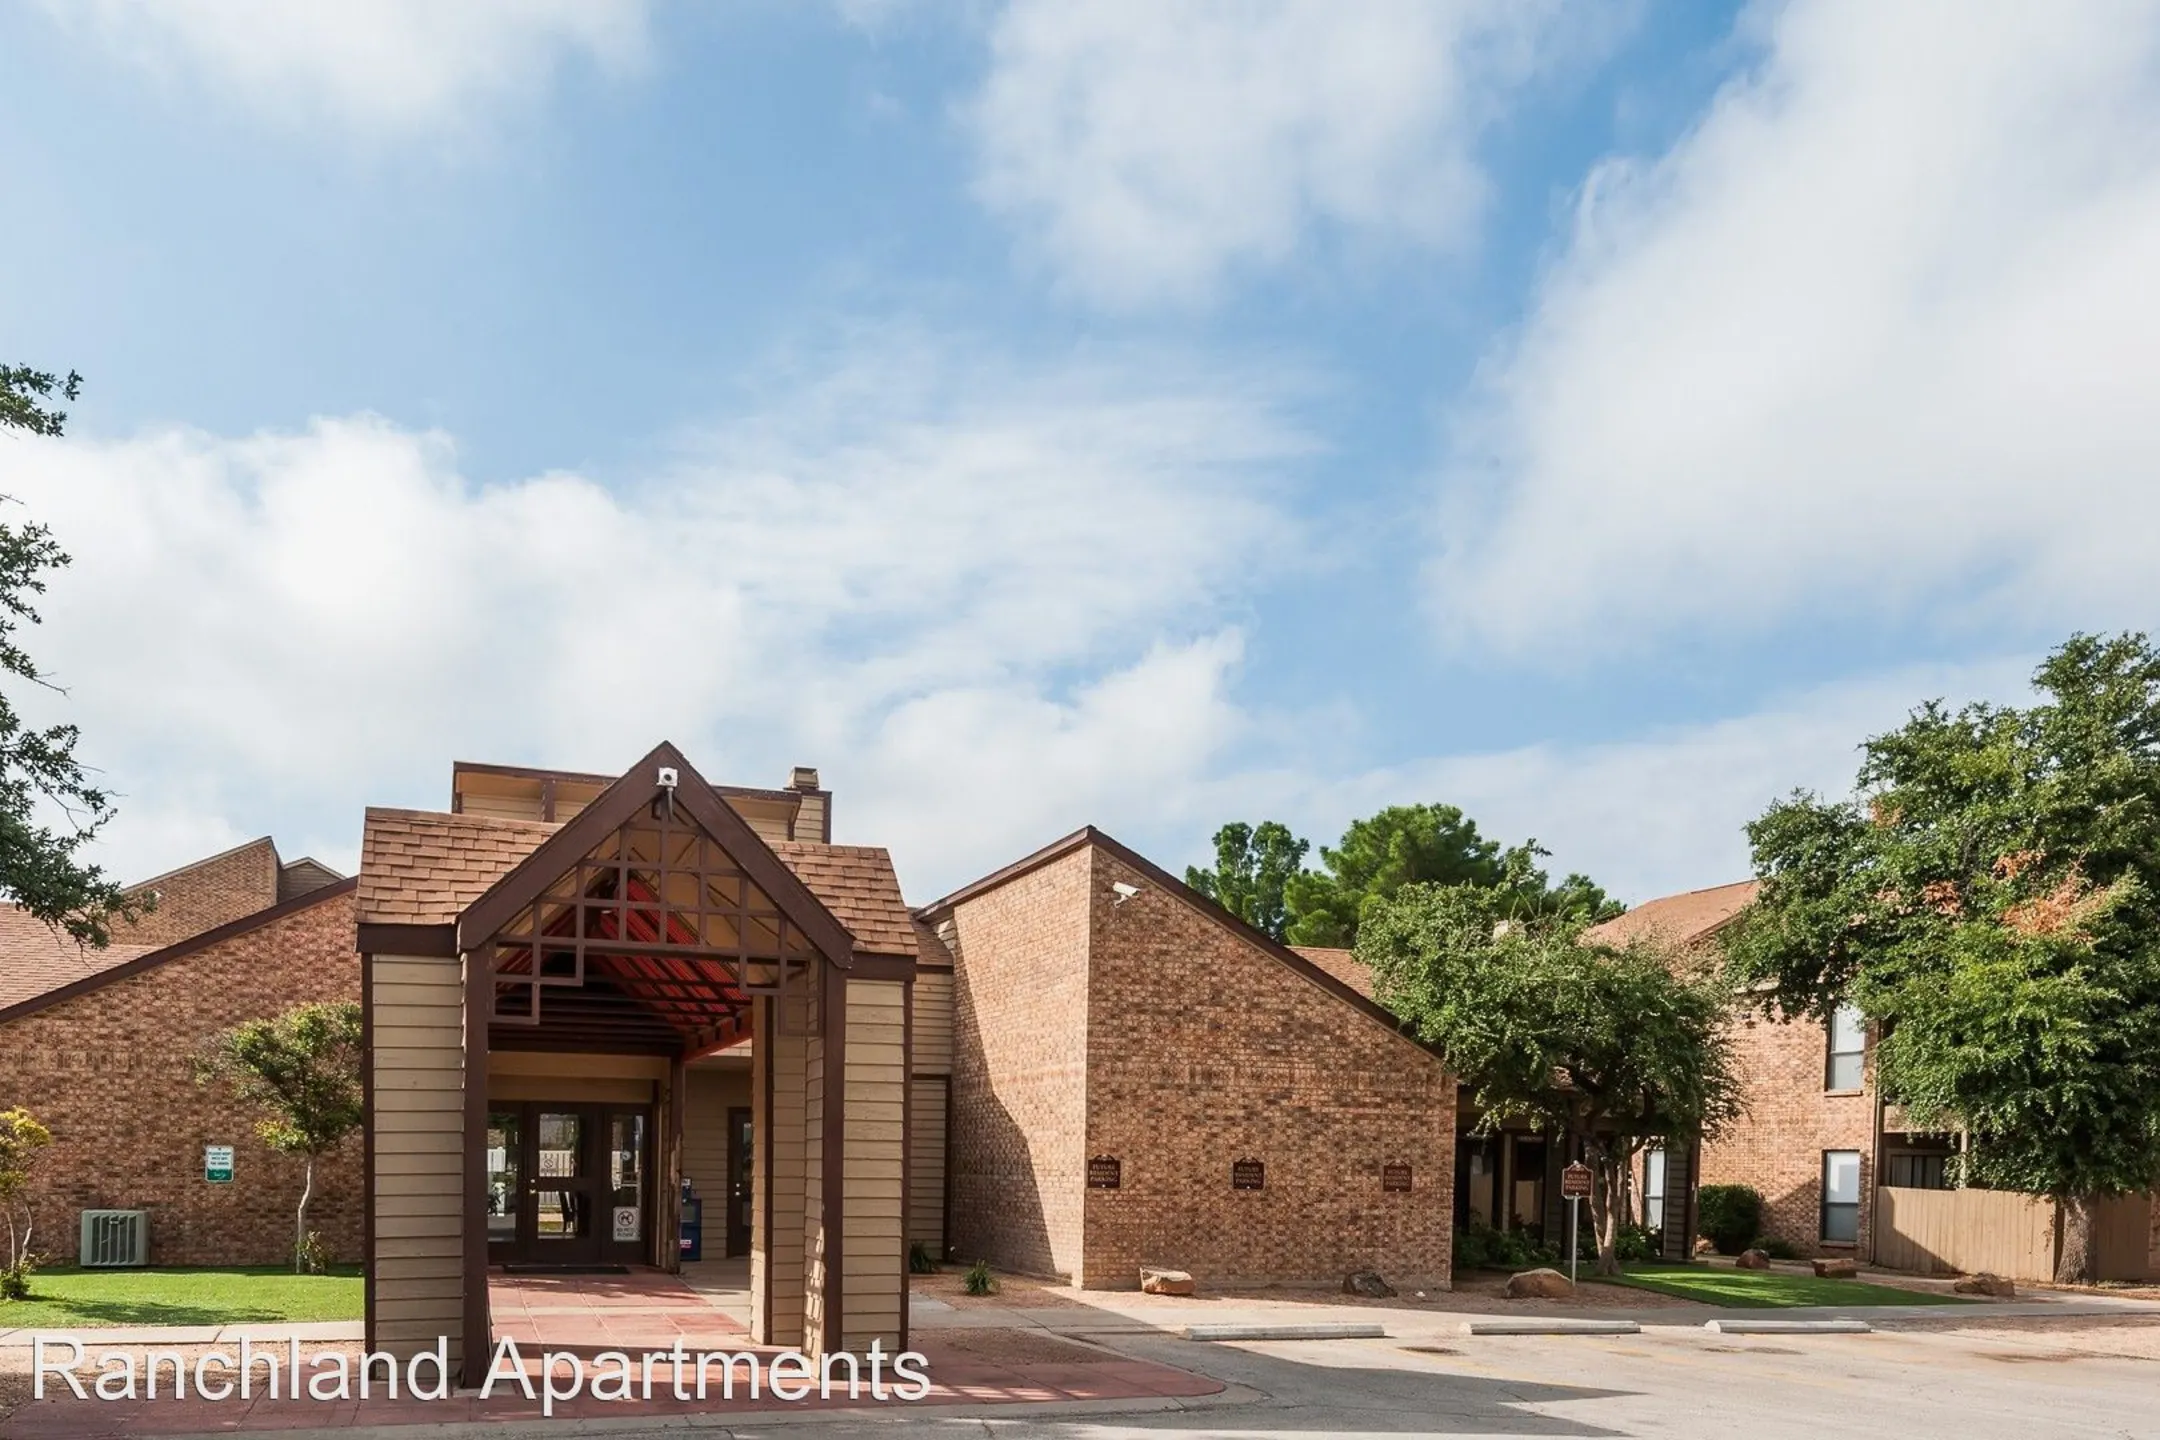 Building - Ranchland Apartments - Midland, TX